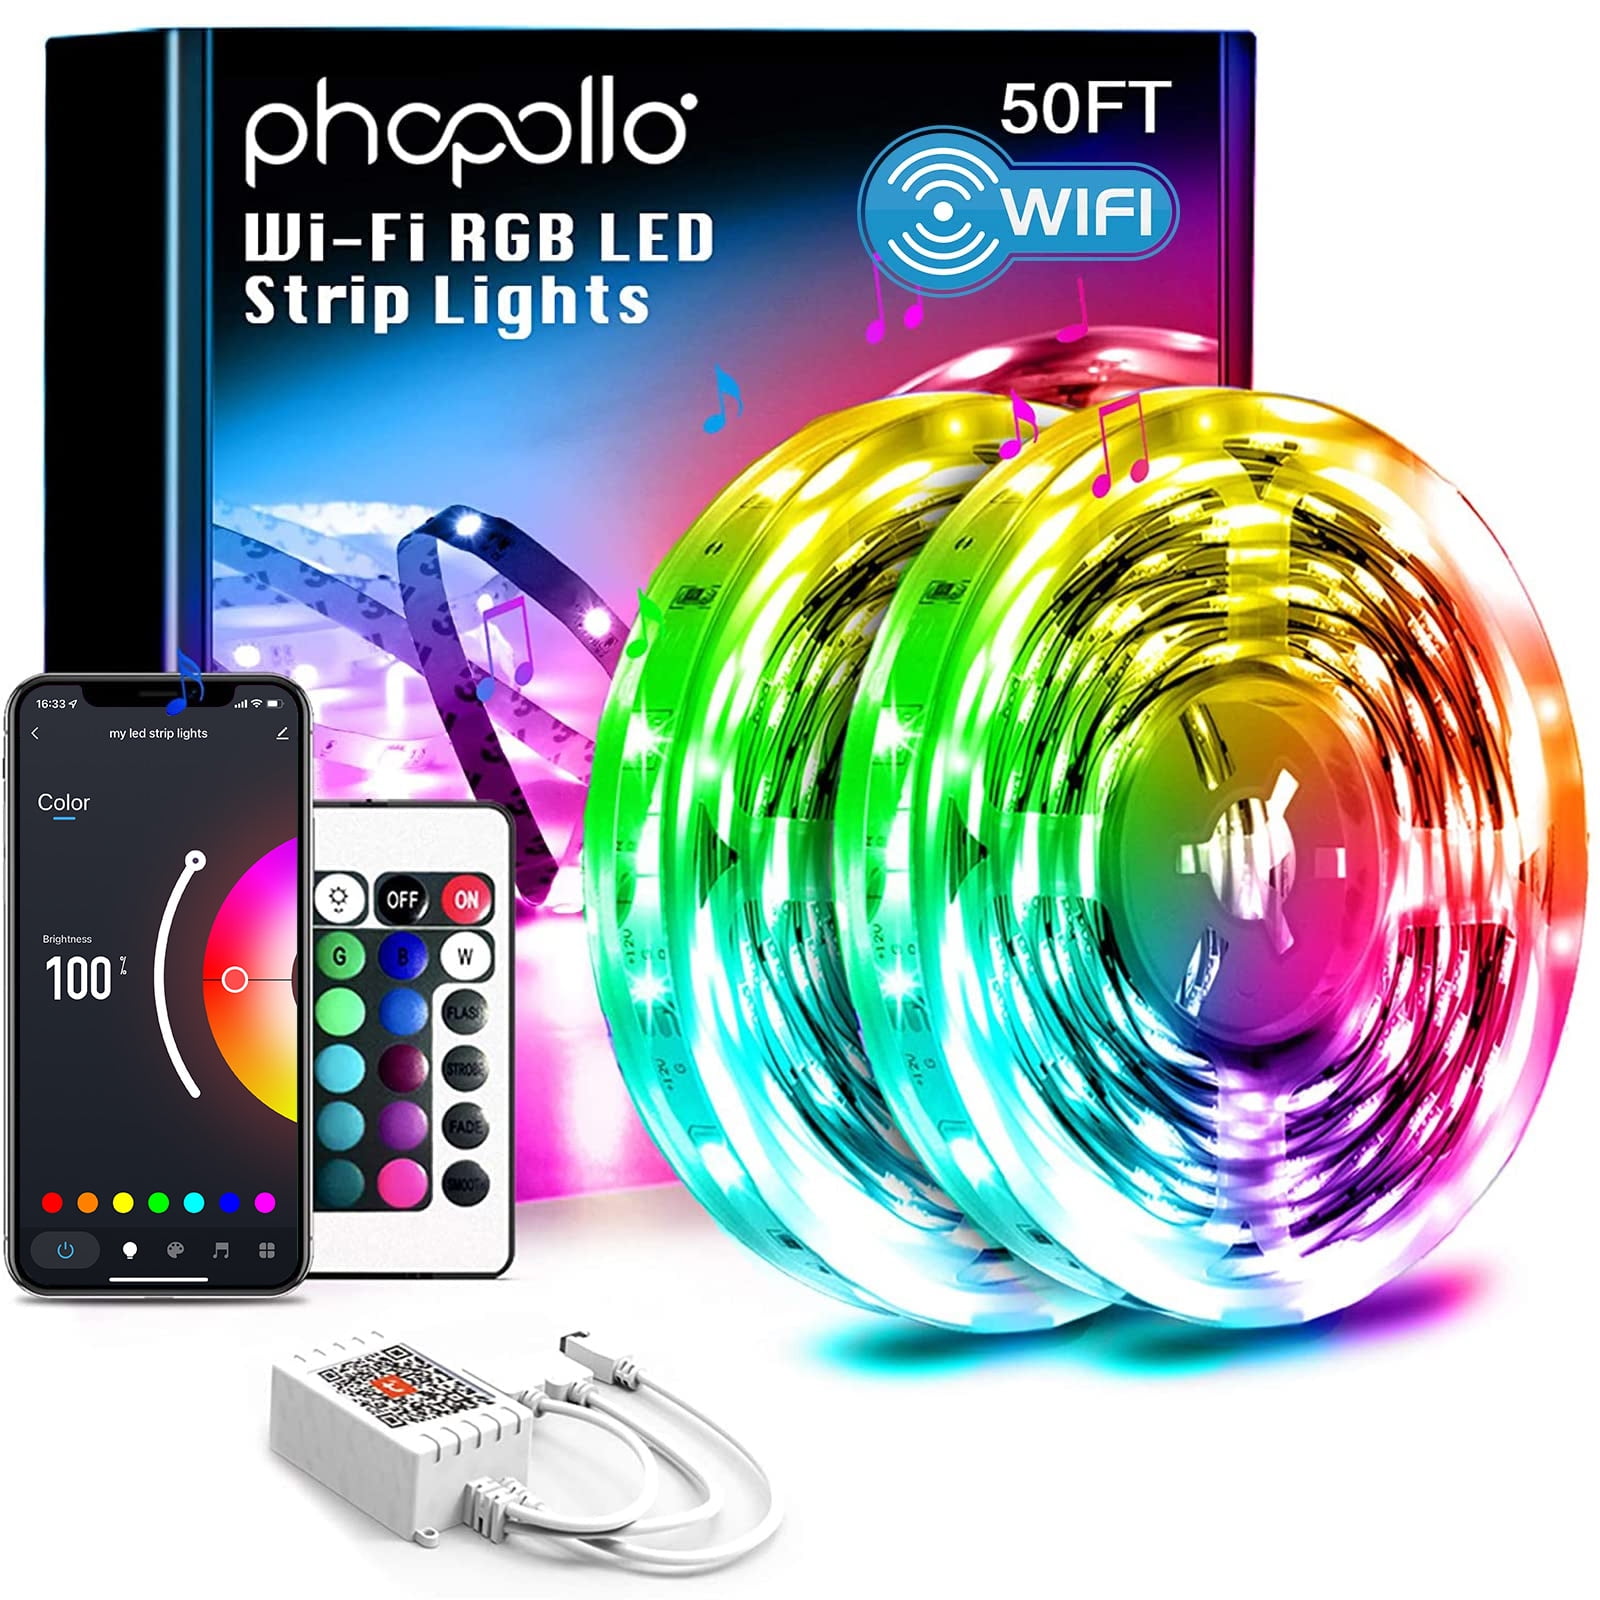 uddybe Daddy Gymnastik Phopollo 50ft Wifi LED Strip Lights, Work with Alexa and Google Assistant,  Color Changing RGB LED Lights for Bedroom Home Decor(25ft*2) - Walmart.com